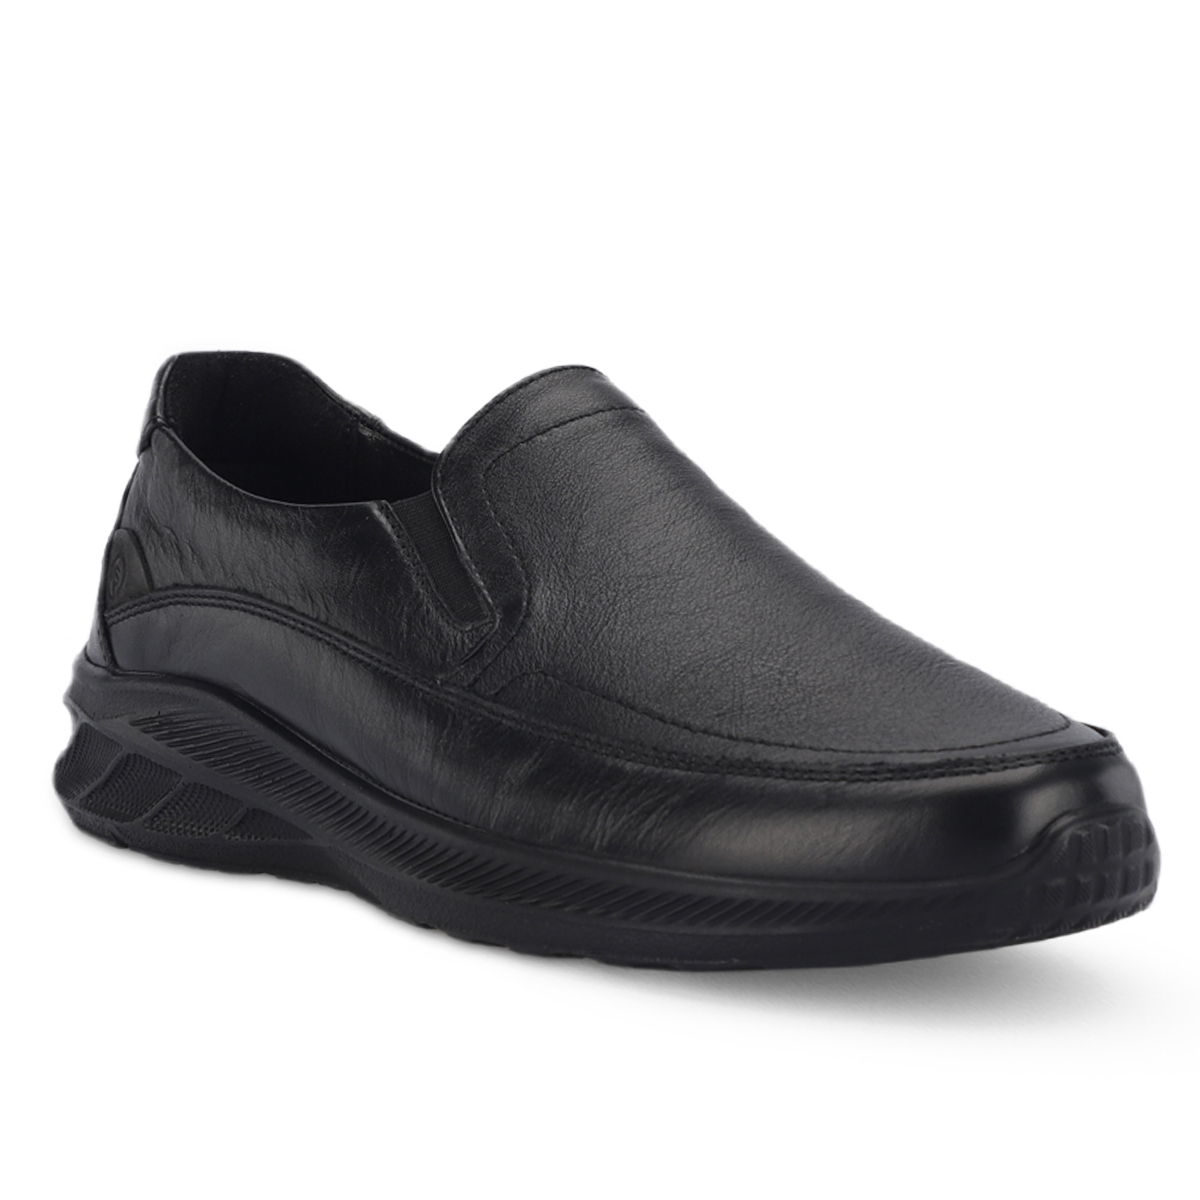 Forelli - Forelli JONS-G Comfort Erkek Ayakkabı Siyah